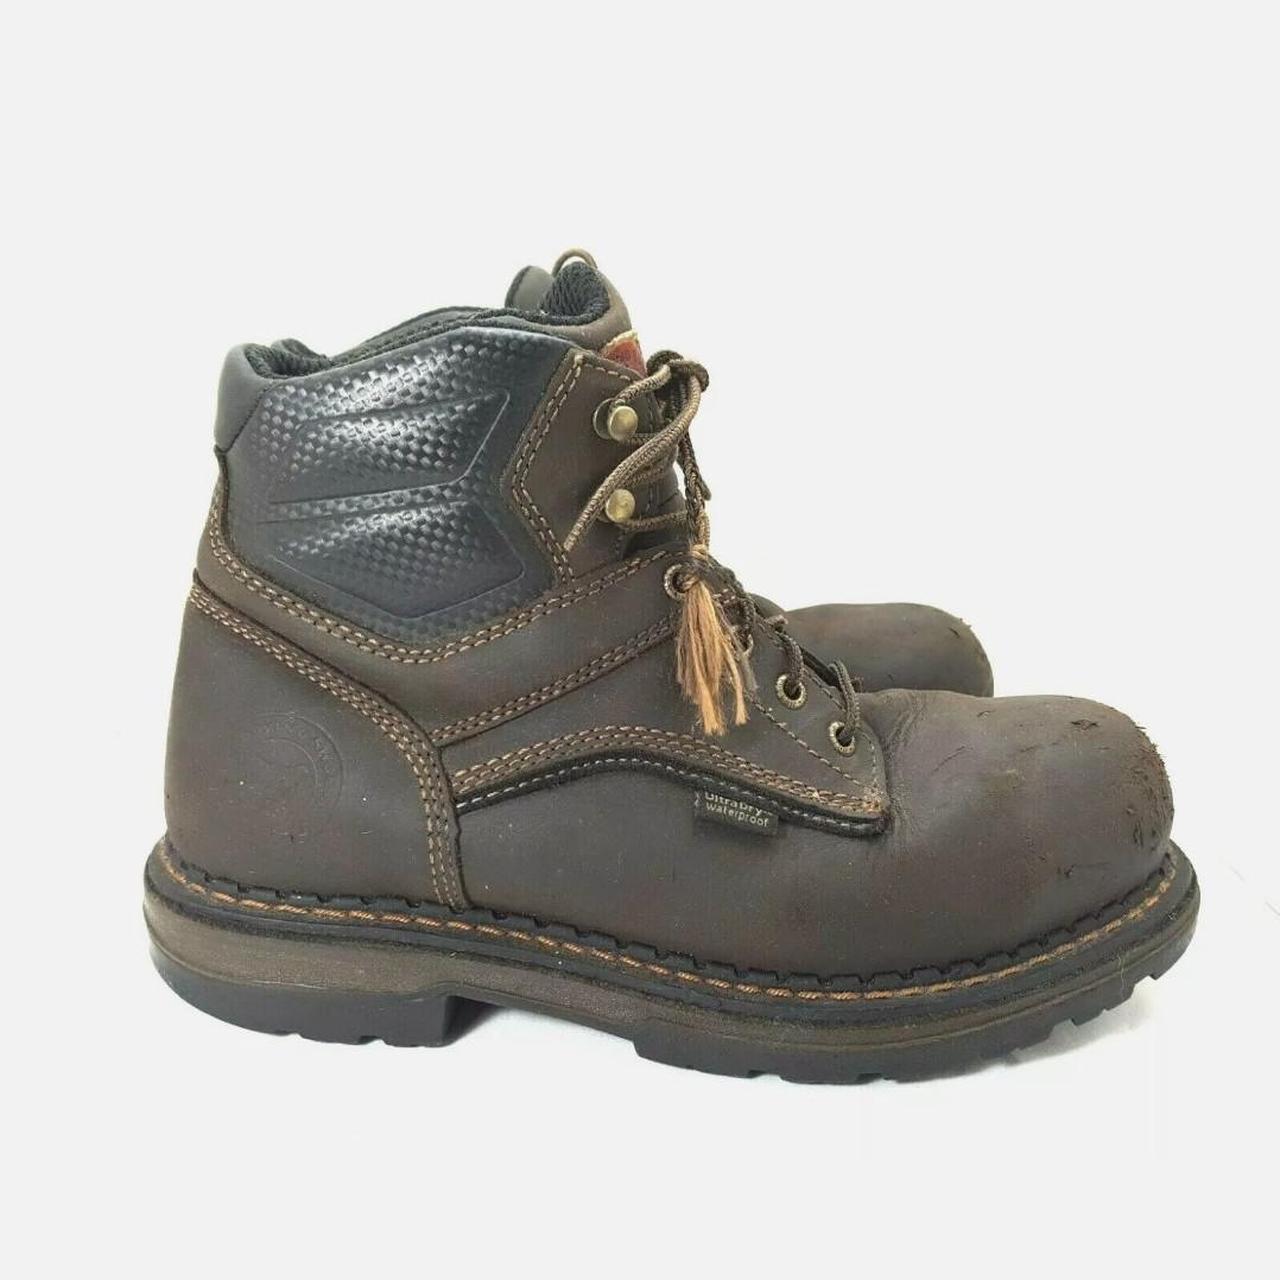 are irish setter aluminum toe work boots